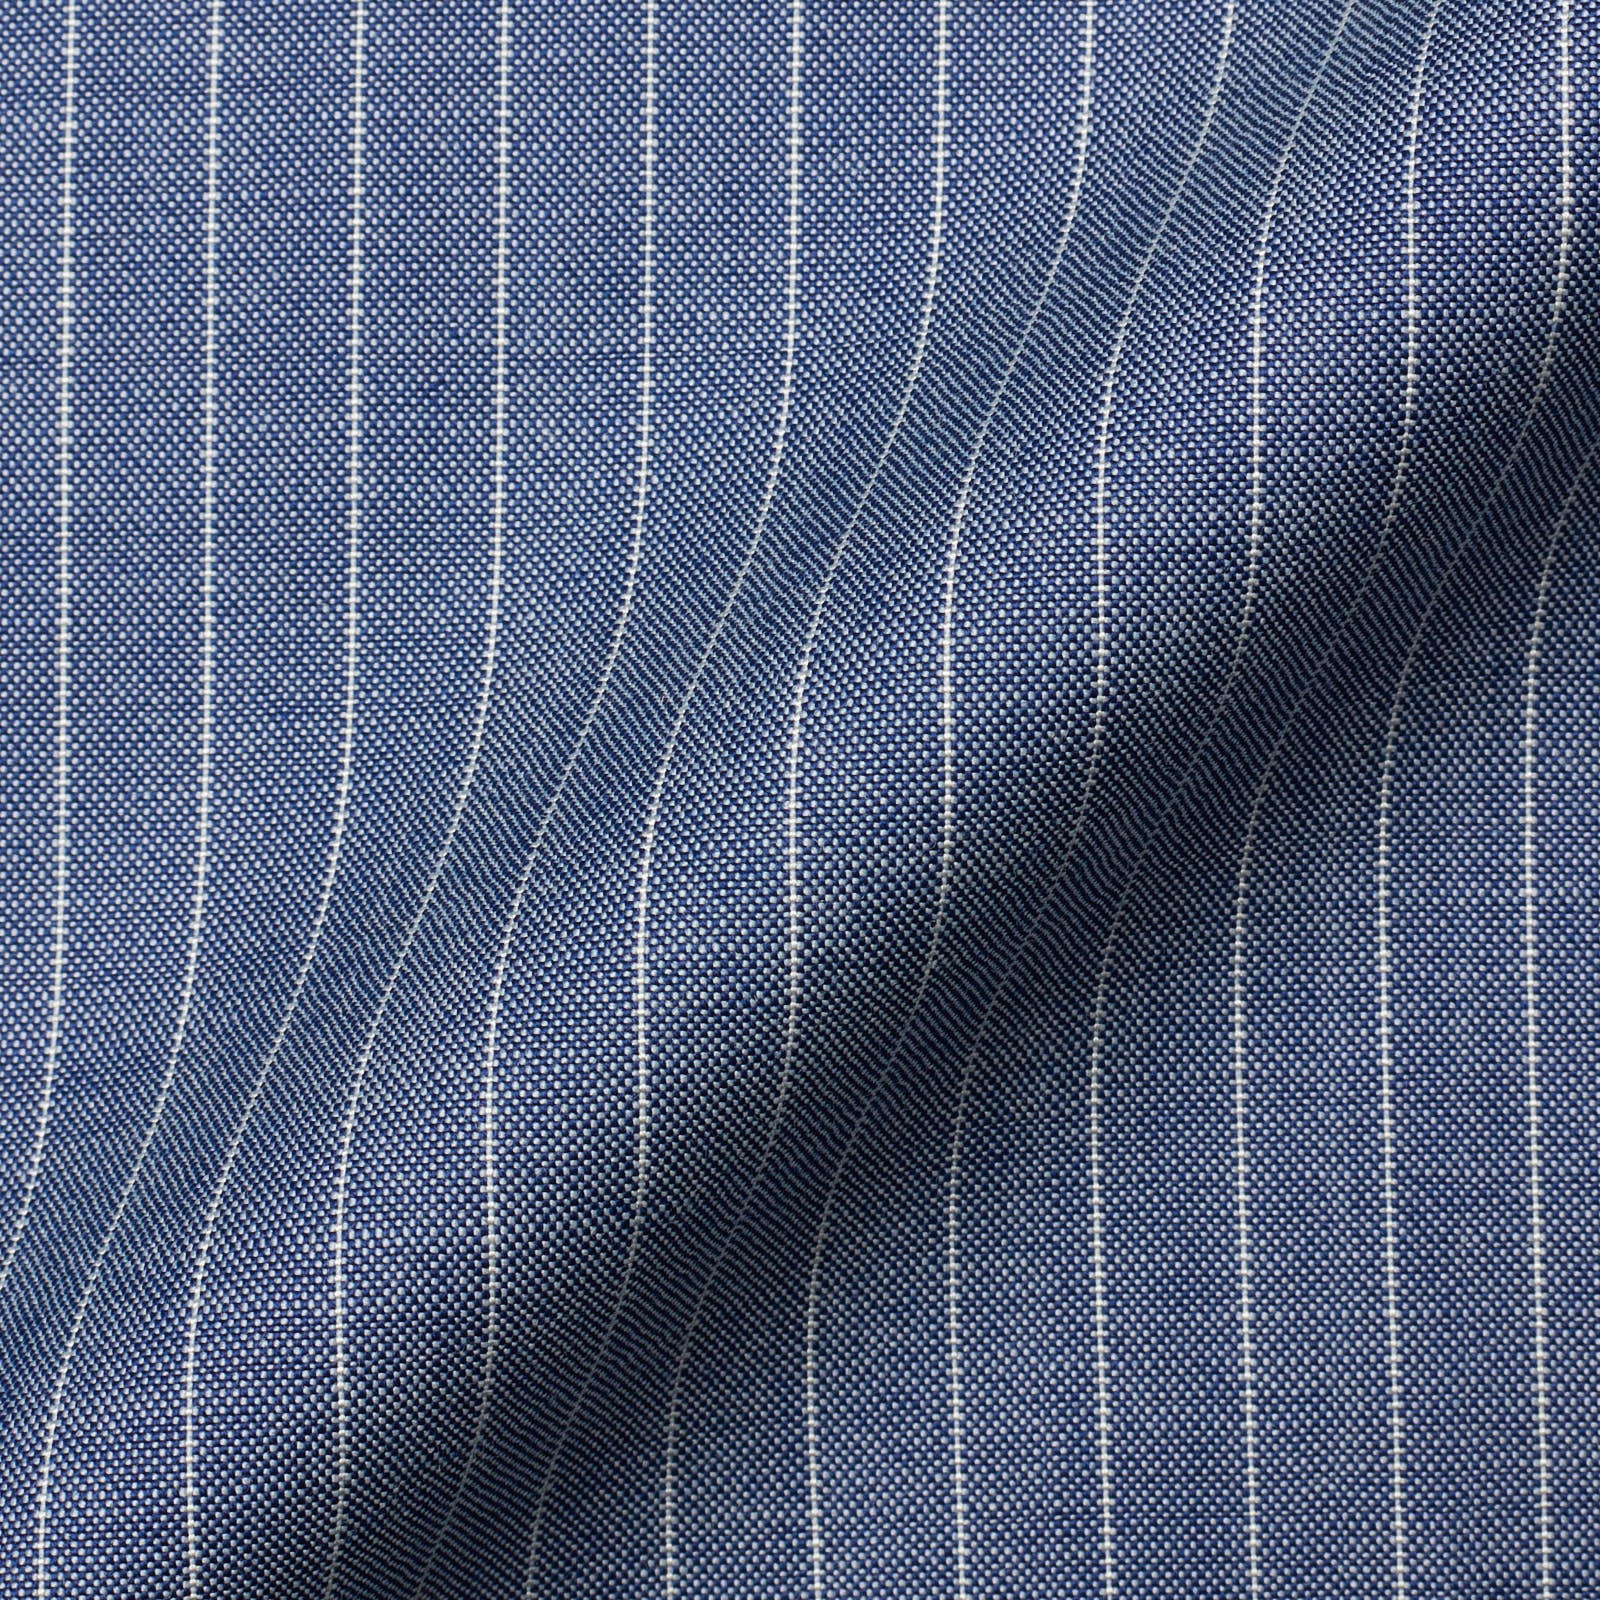 VANNUCCI Milano Blue Pintripe Loro Piana Zealander Wool Suit EU 54 NEW US 44